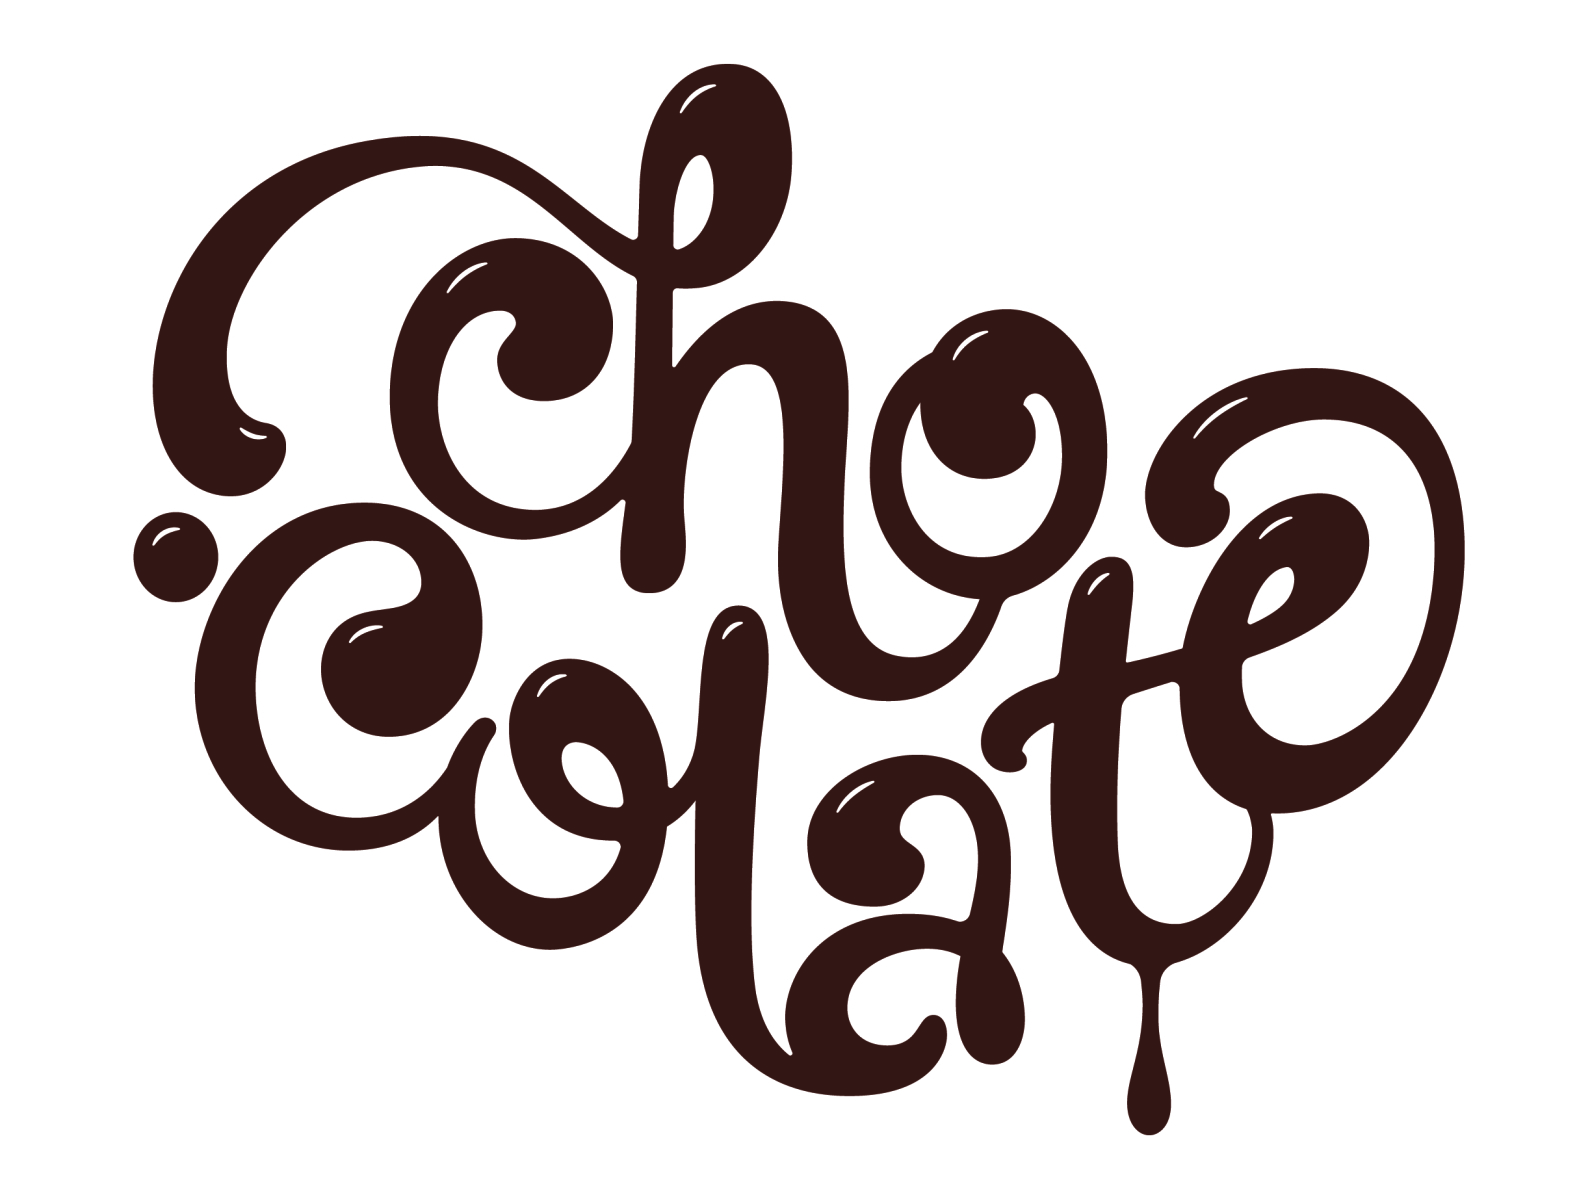 Шрифт choco. Шоколадные надписи. Надпись шоколад. Шоколад леттеринг. Красивая надпись шоколад.